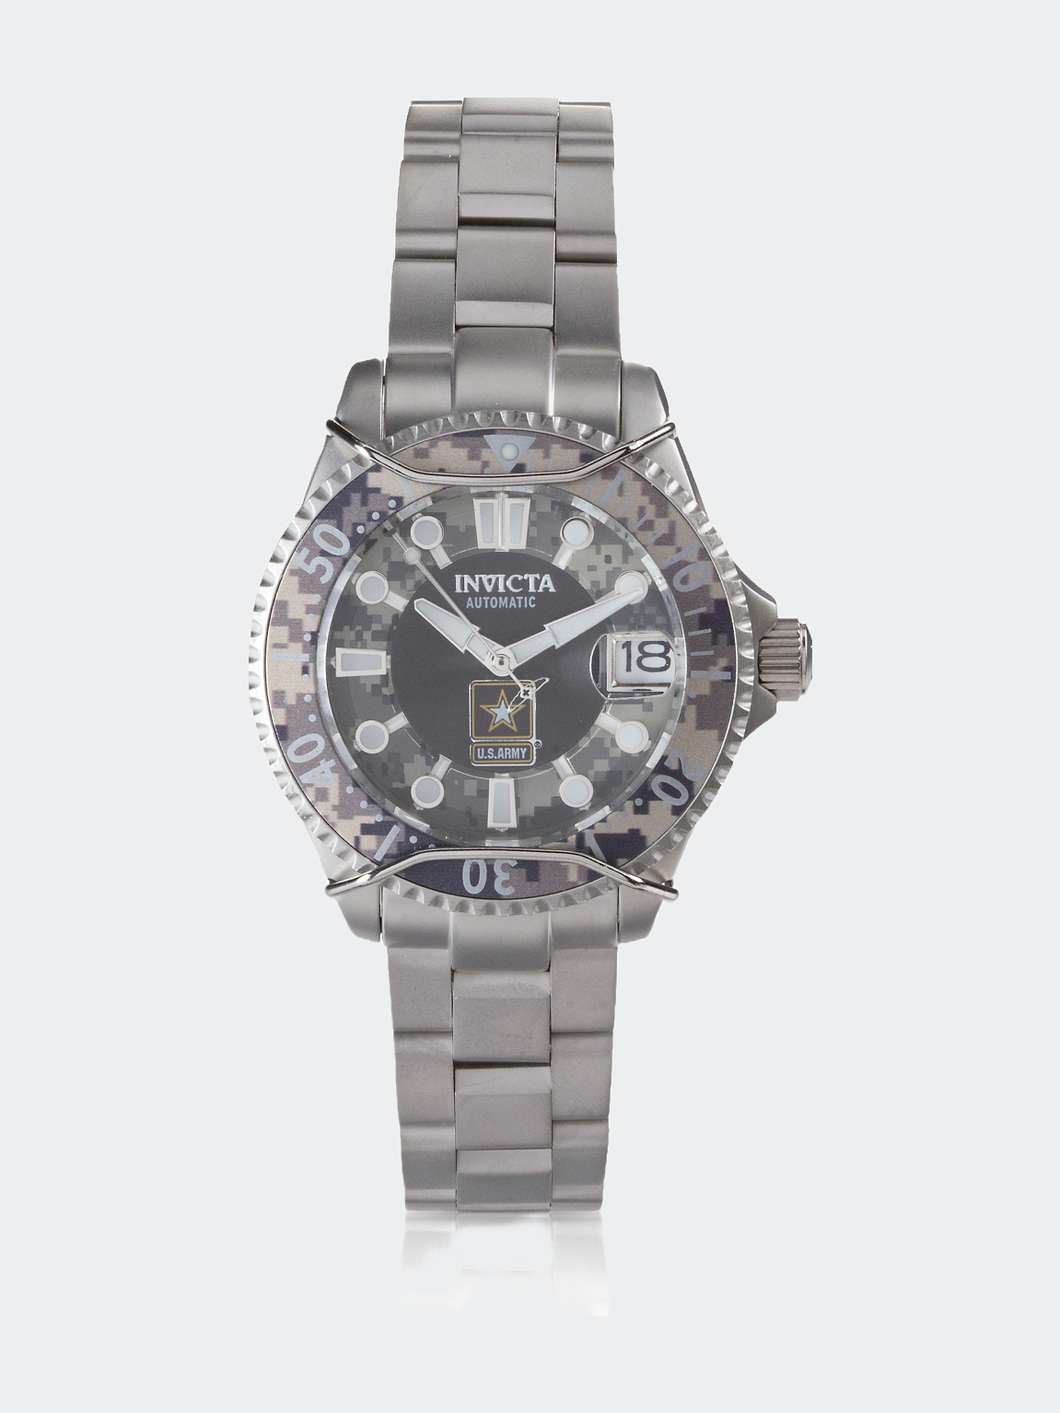 Womens 31855 Silver Stainless Steel Quartz Formal Watch